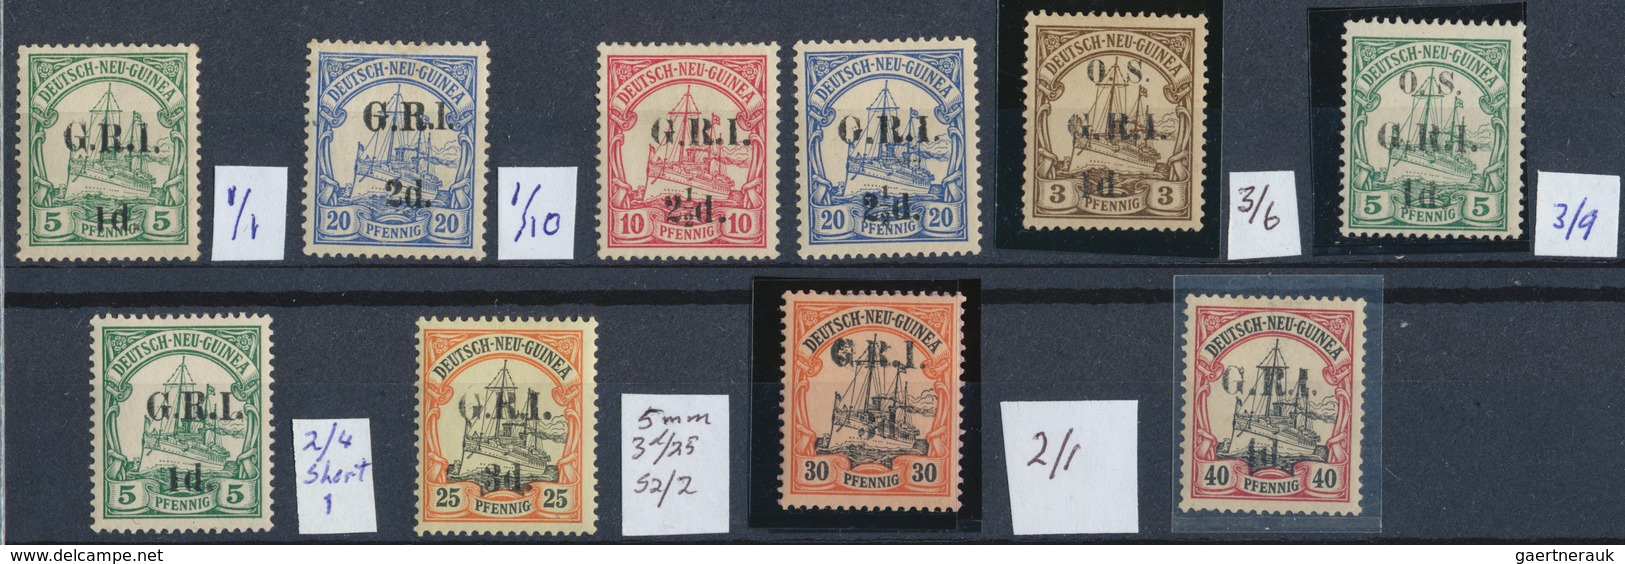 31854 Deutsch-Neuguinea - Britische Besetzung: 1914, Mint Lot Of Ten Stamps Incl. Varieties, Inventory Enc - Deutsch-Neuguinea